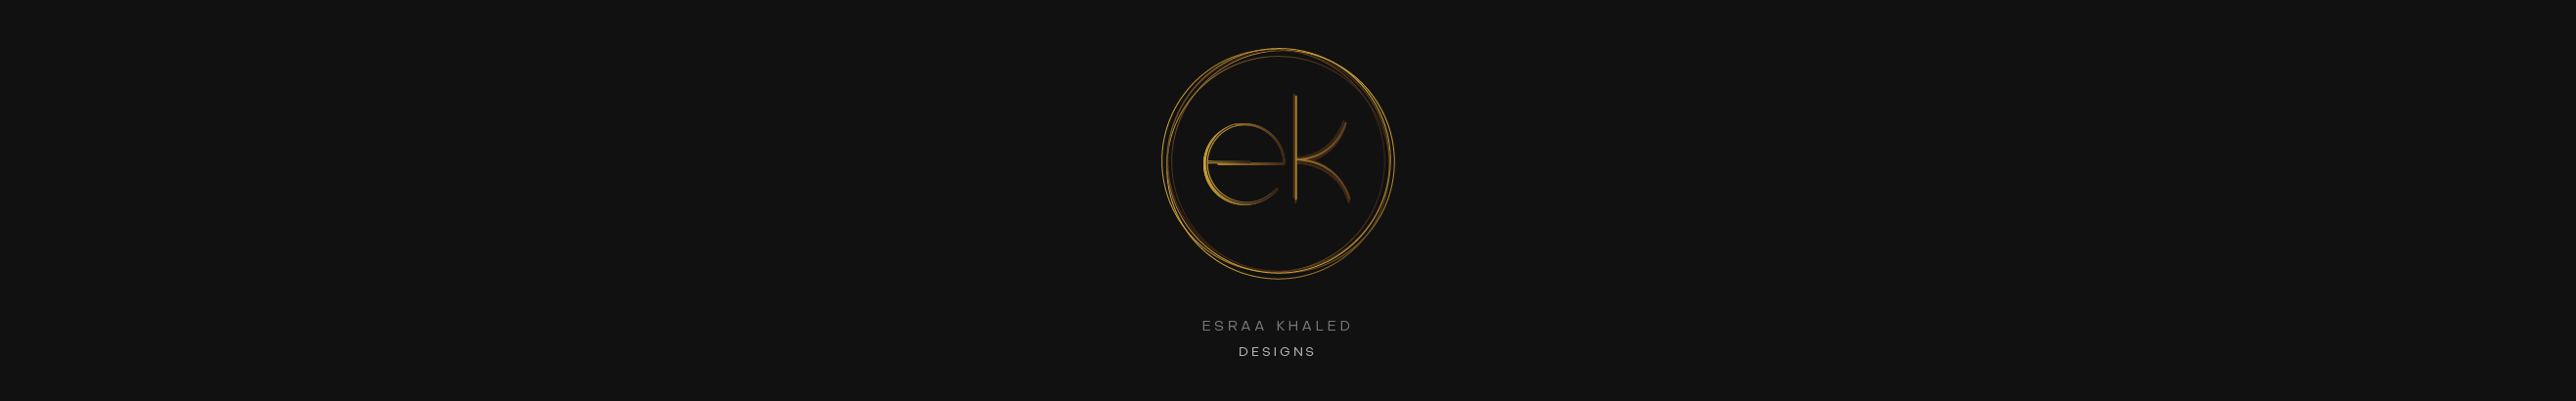 Esraa K. Abdullatif's profile banner